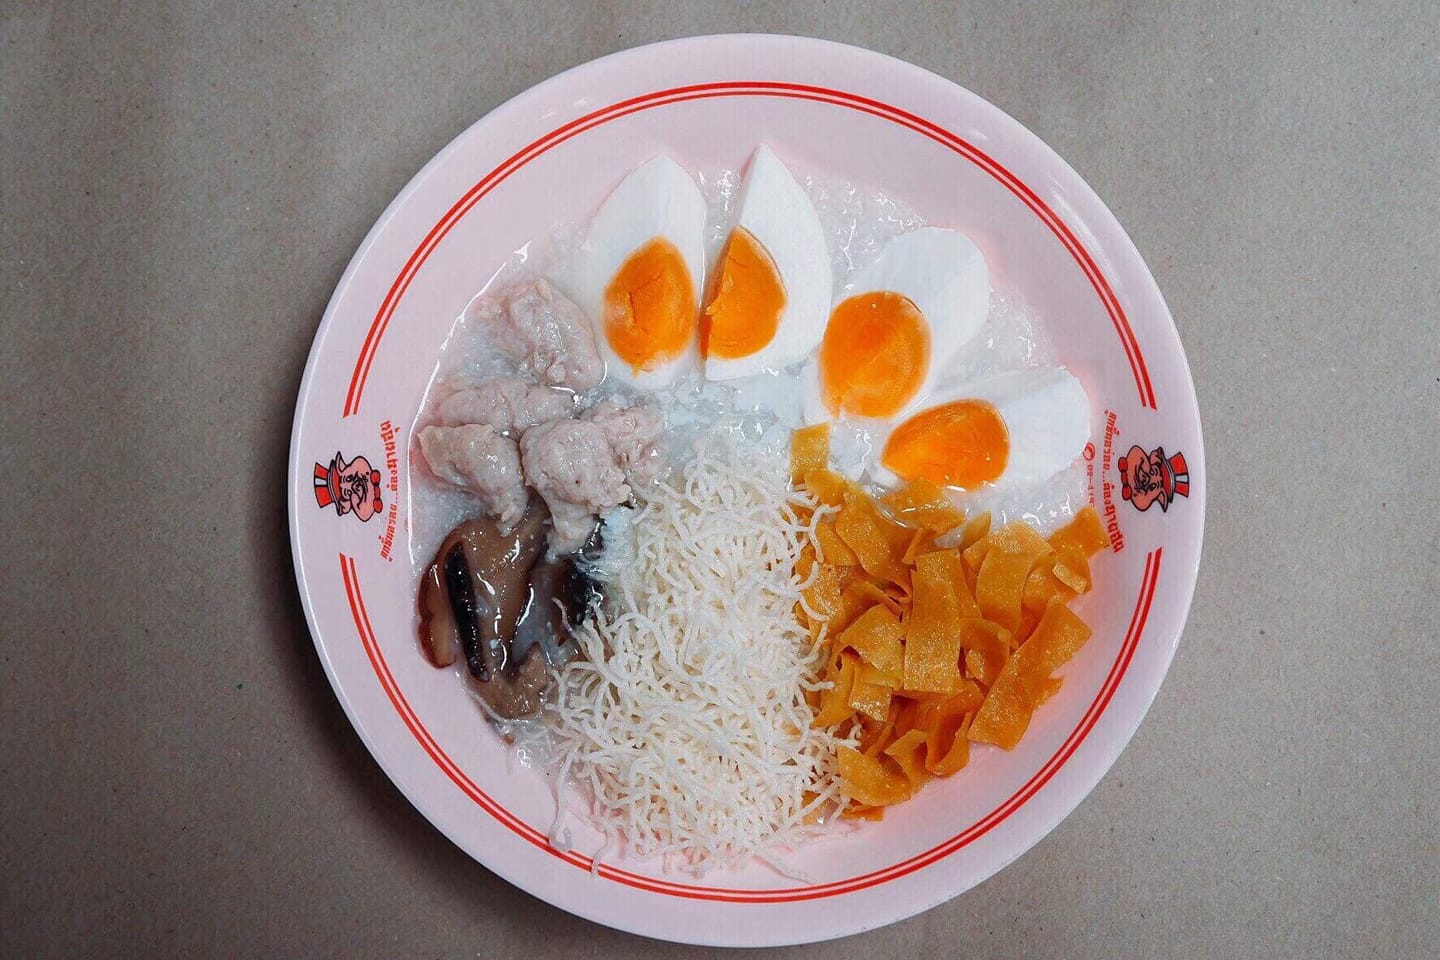 Nai Hui Pork Porridge by Wantana @ Chang Khian